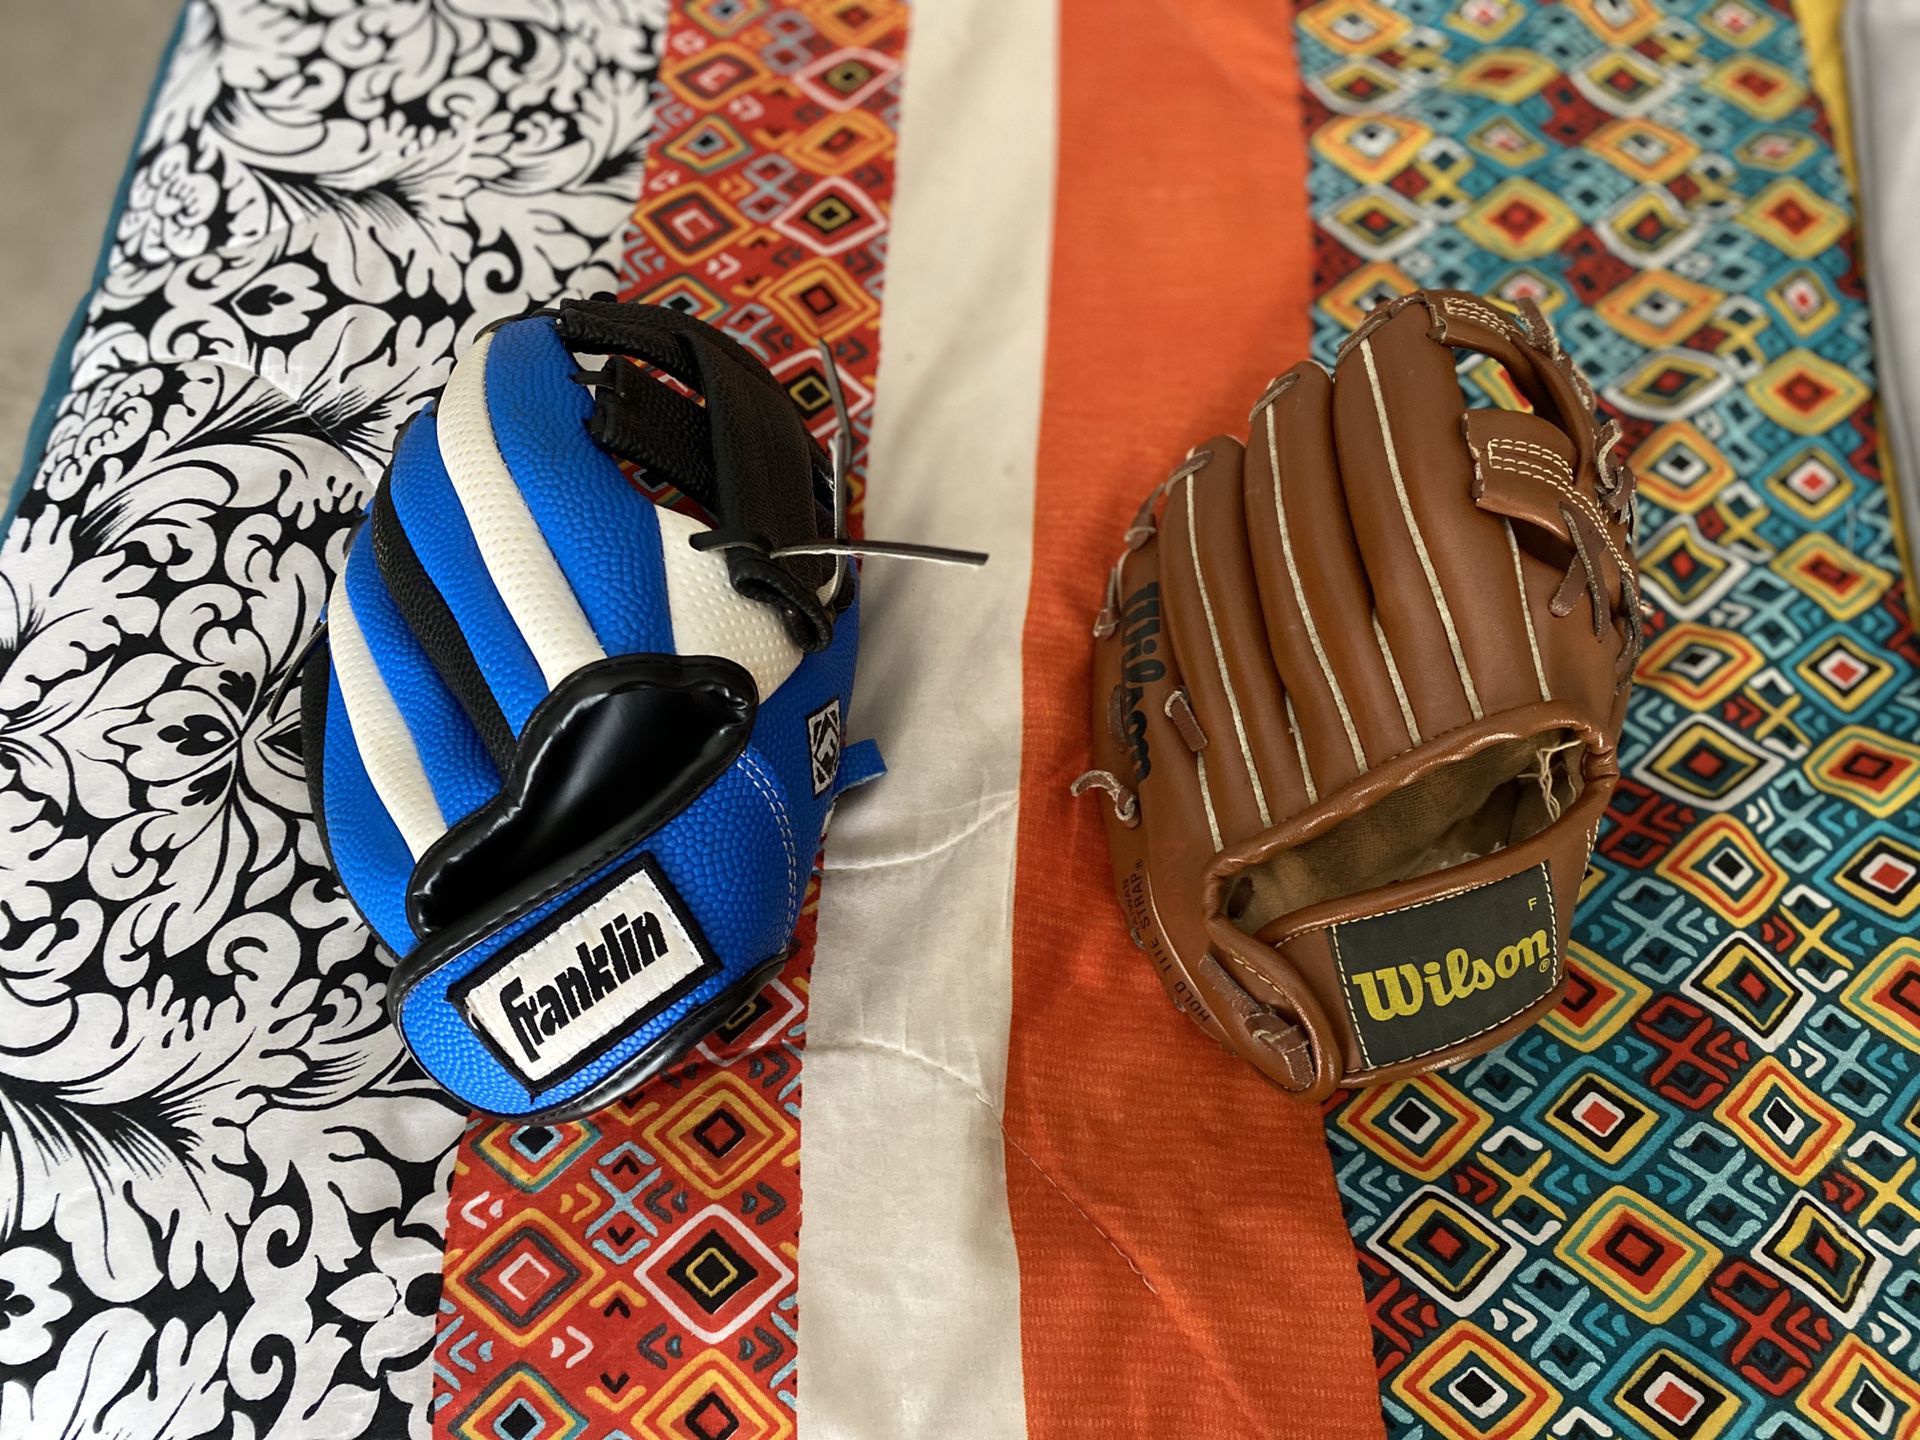 Baseball gloves (TBall size)